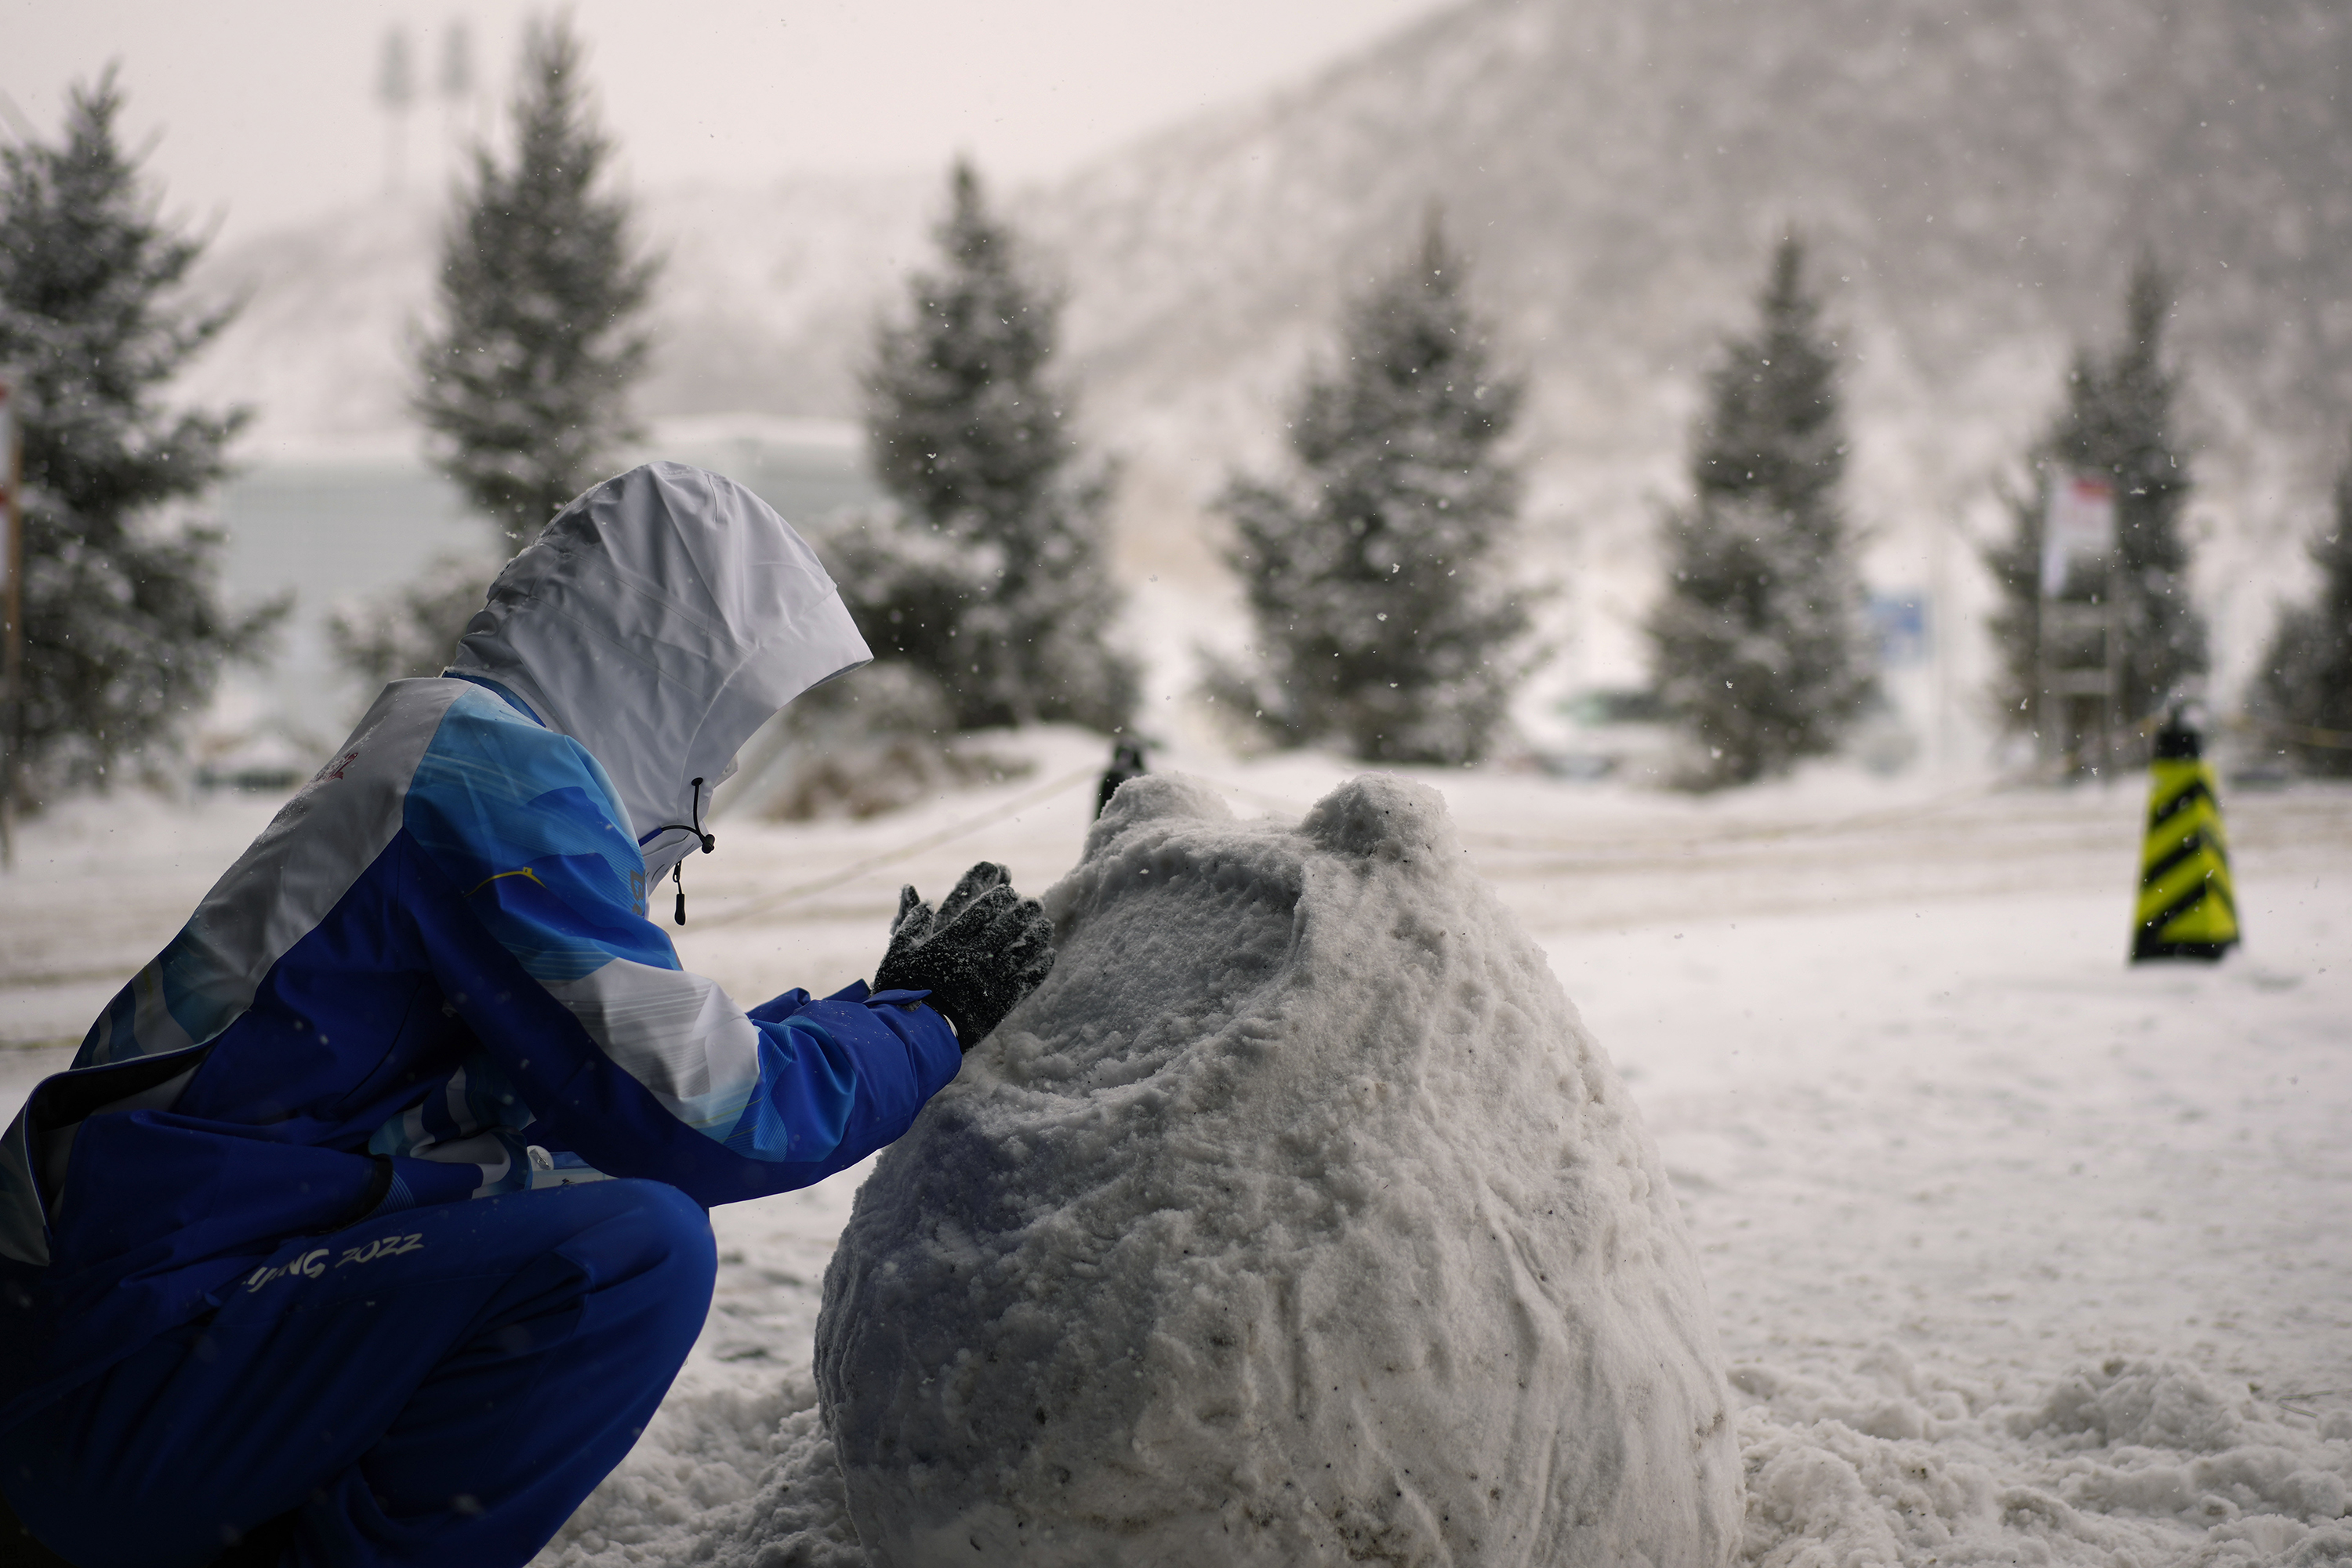 A volunteer sculpts Olympic mascot Bing Dwen Dwen from snow during a snowstorm on Sunday.